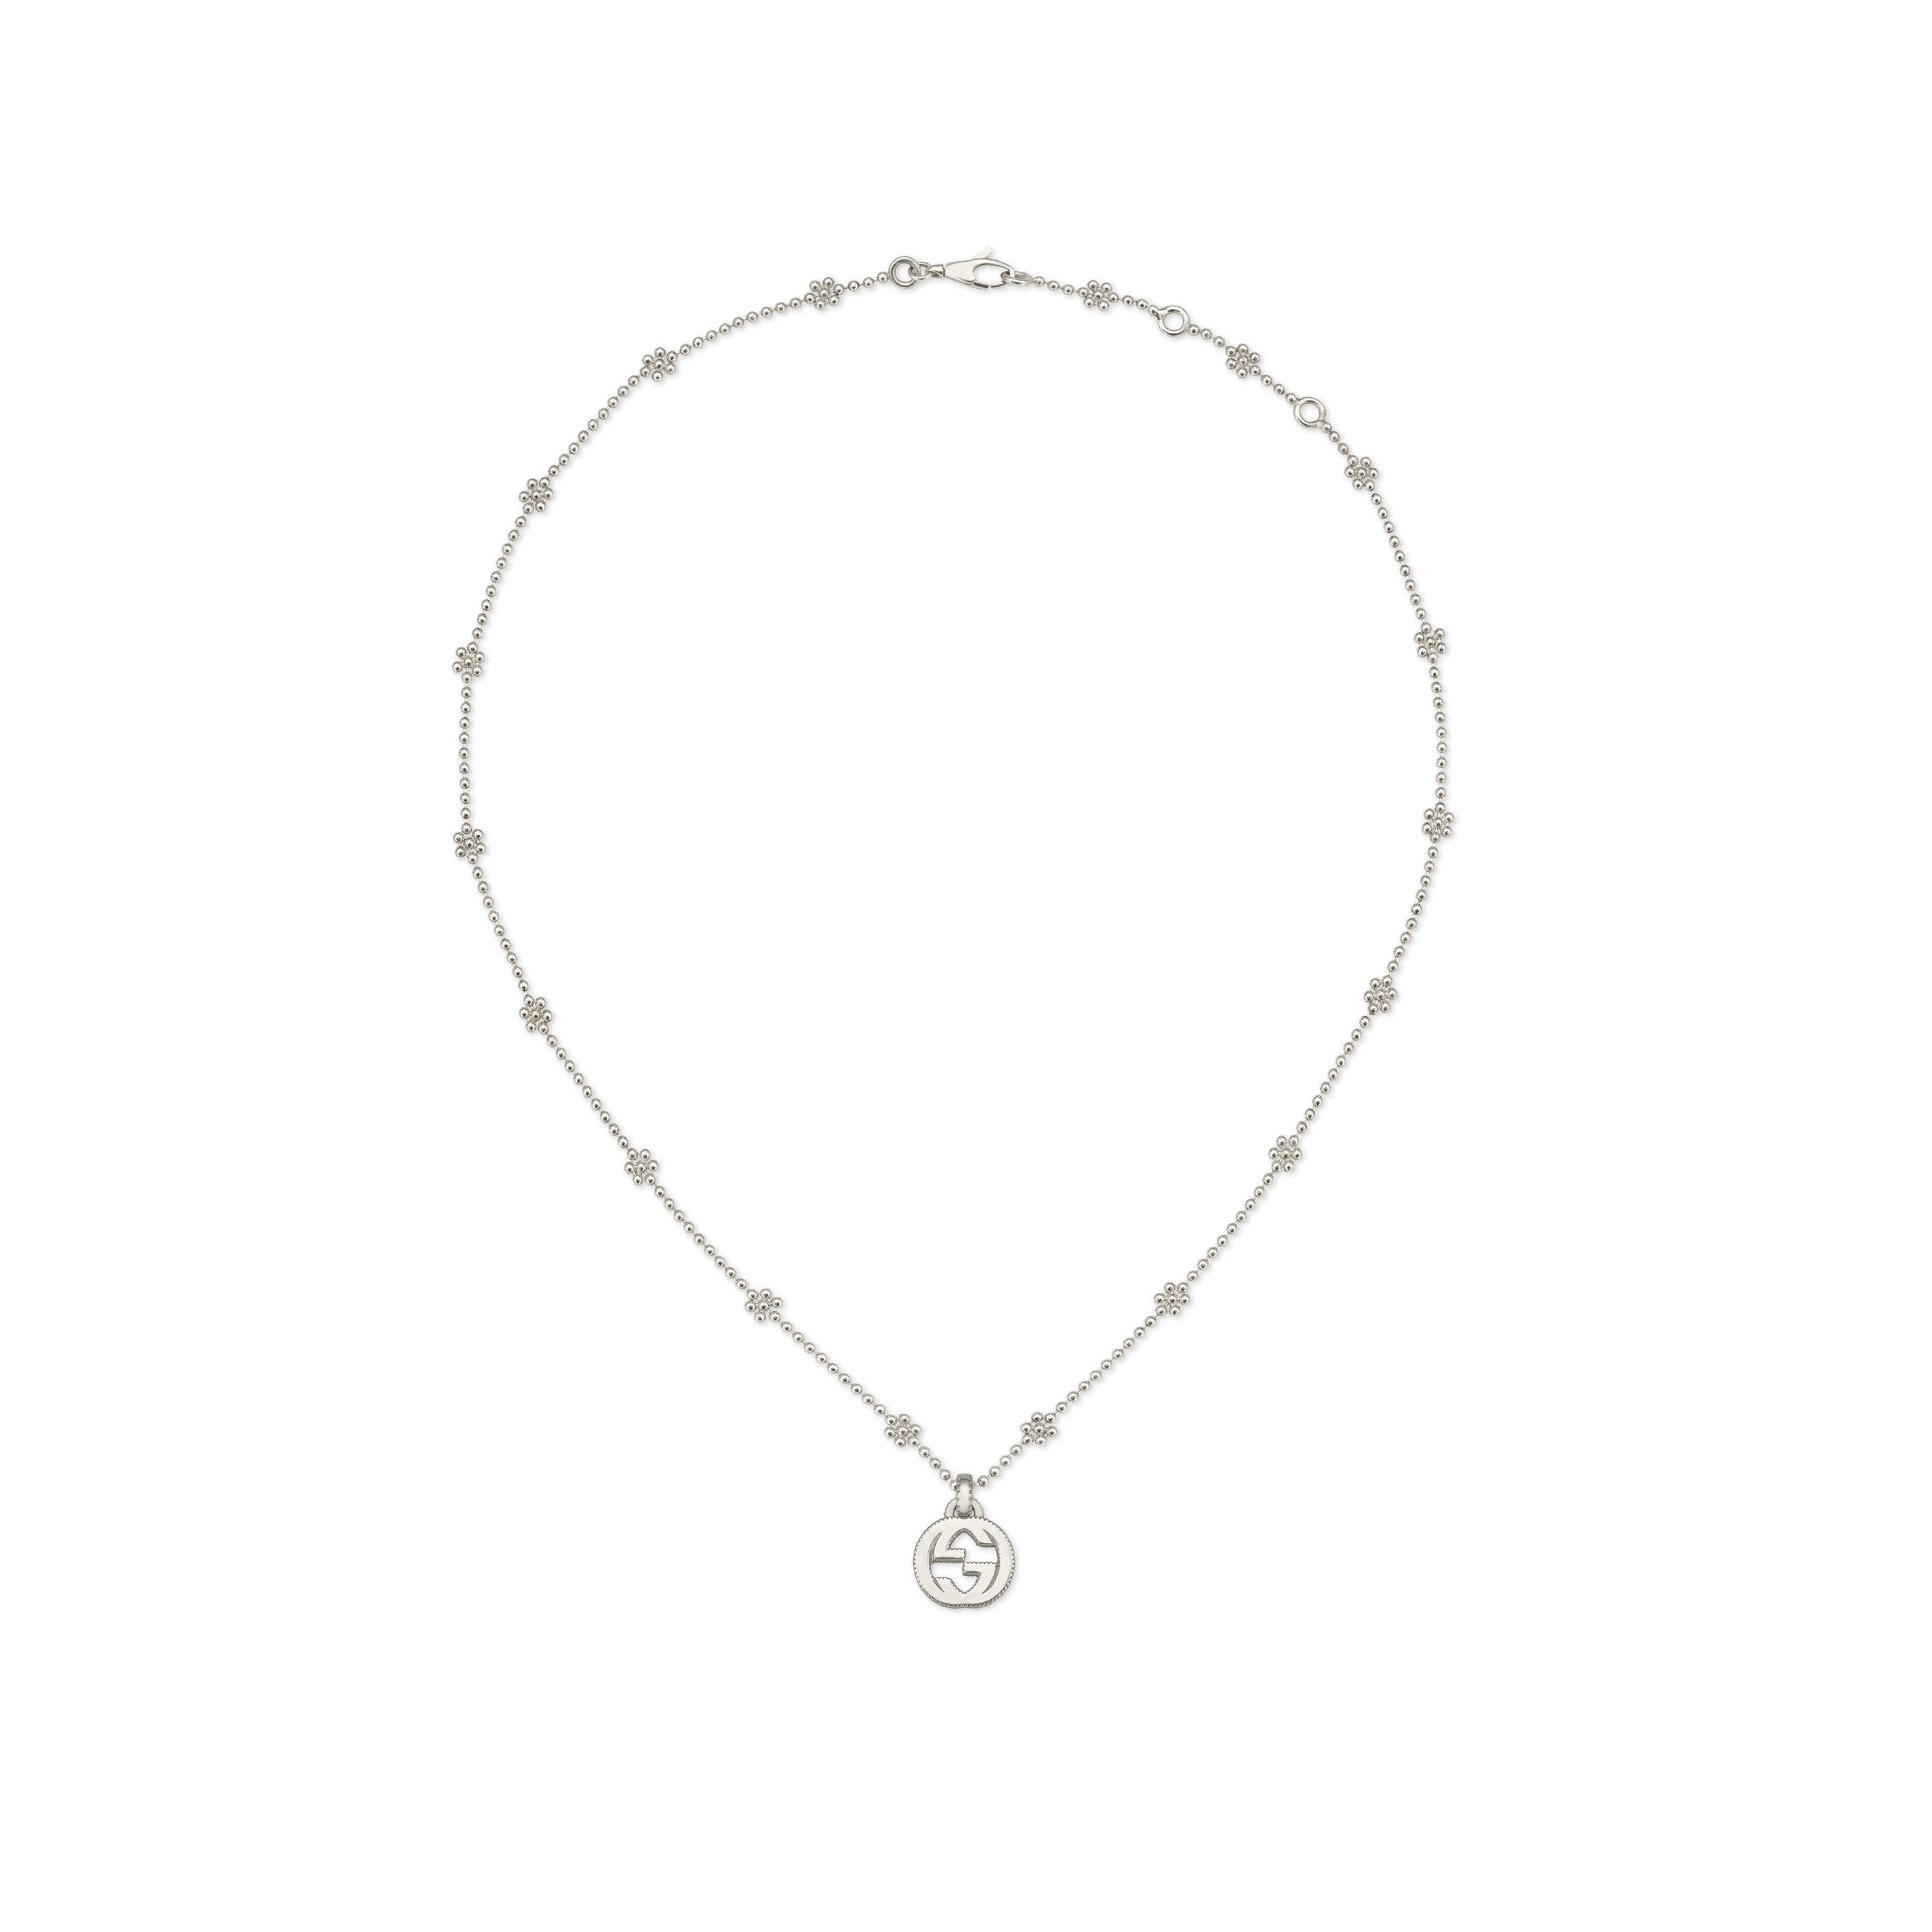 Interlocking G necklace in silver YBB479221001 Gucci Jewelry